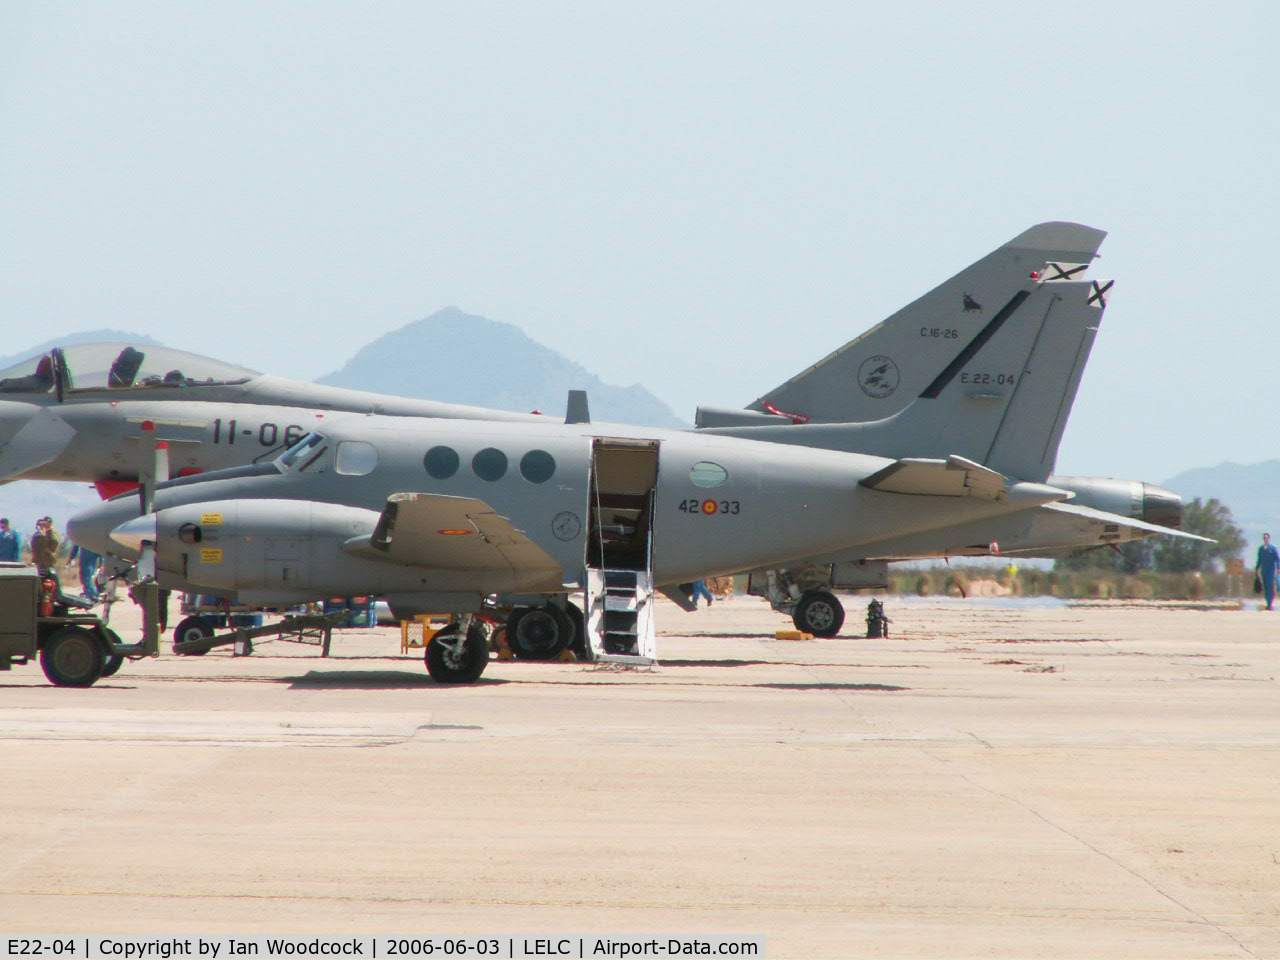 E22-04, Beech C90 King Air C/N LJ-603, Beech C90/San Javier,Murcia.